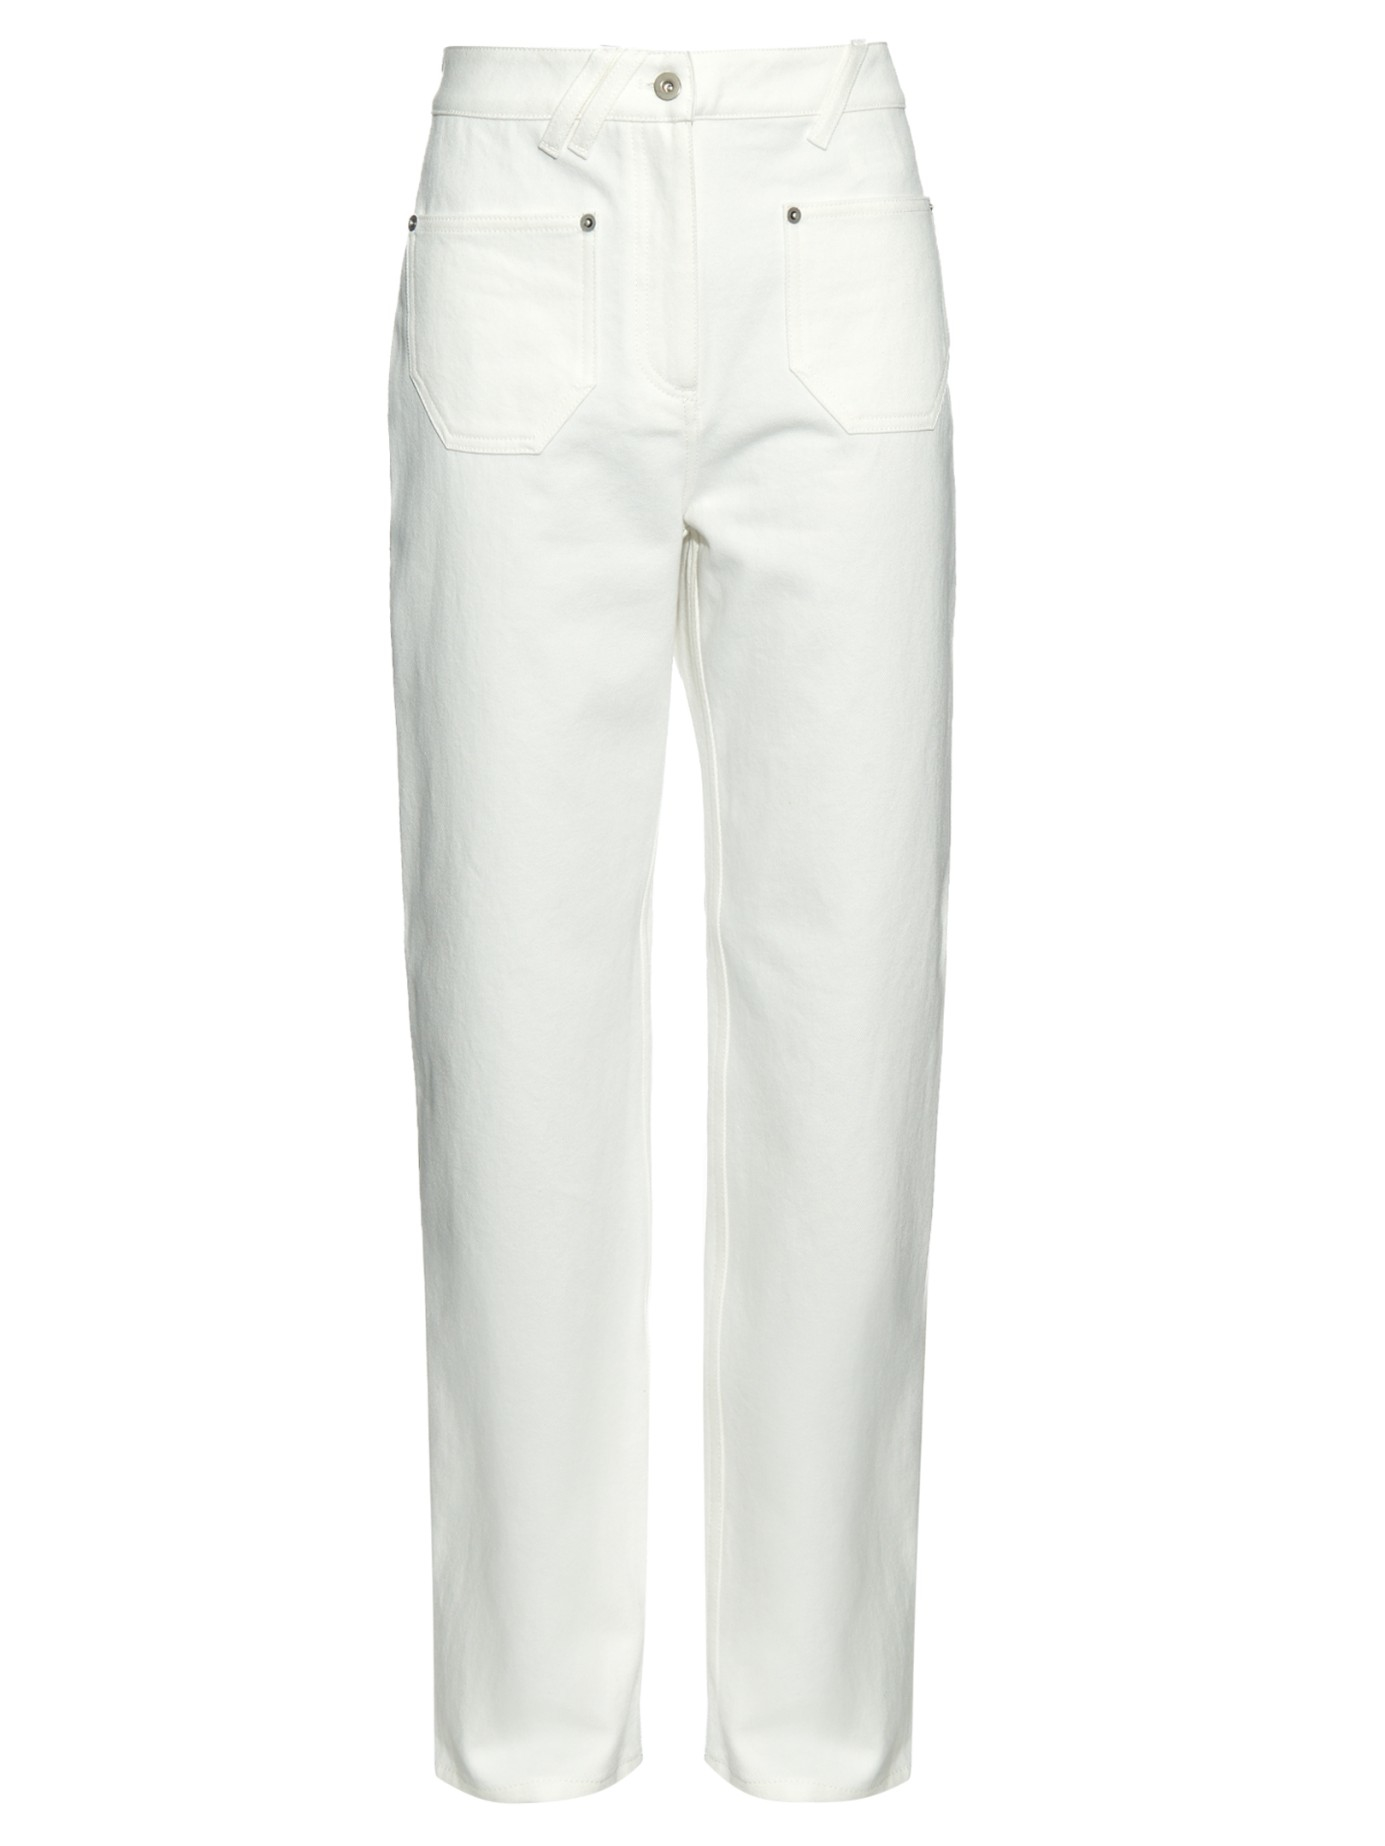 White straight leg high waisted jeans – 100 cotton plus size, cheap ...